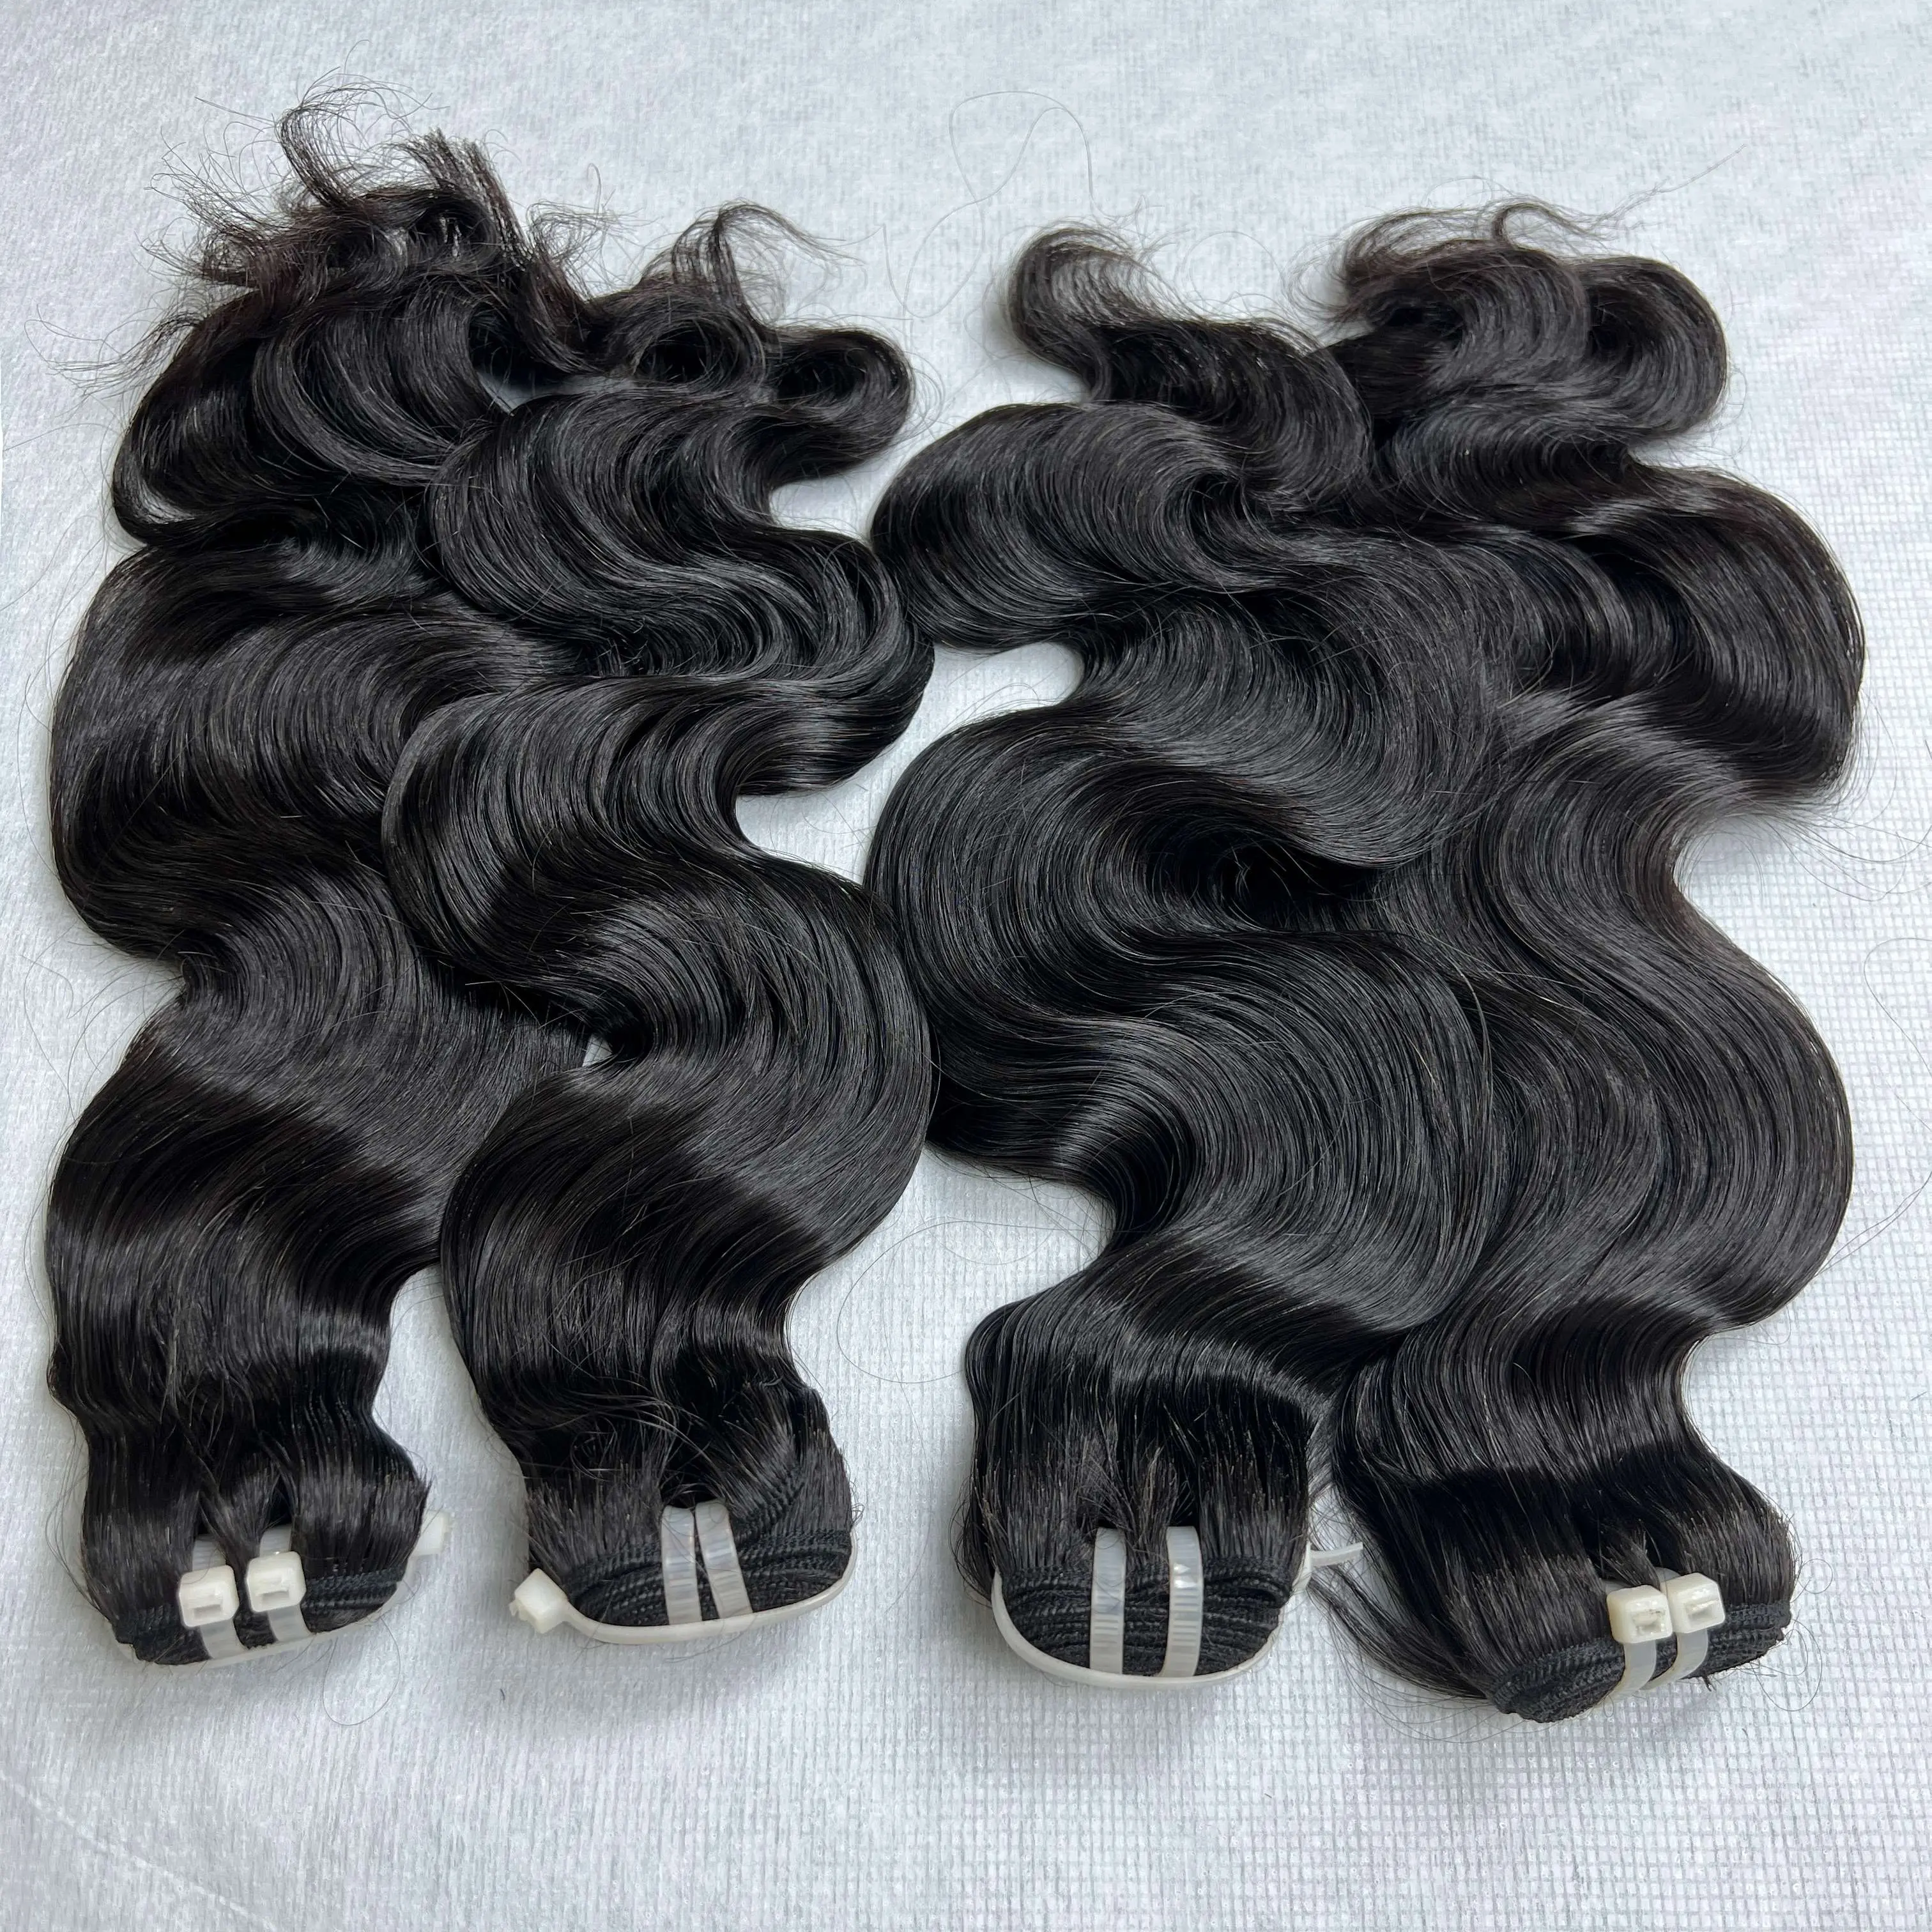 Bundel rambut manusia jalinan gelombang hitam alami orang Malaysia Vietnam rambut Virgin mentah tingkat 10A 12A gelombang tanpa proses jalinan rambut manusia